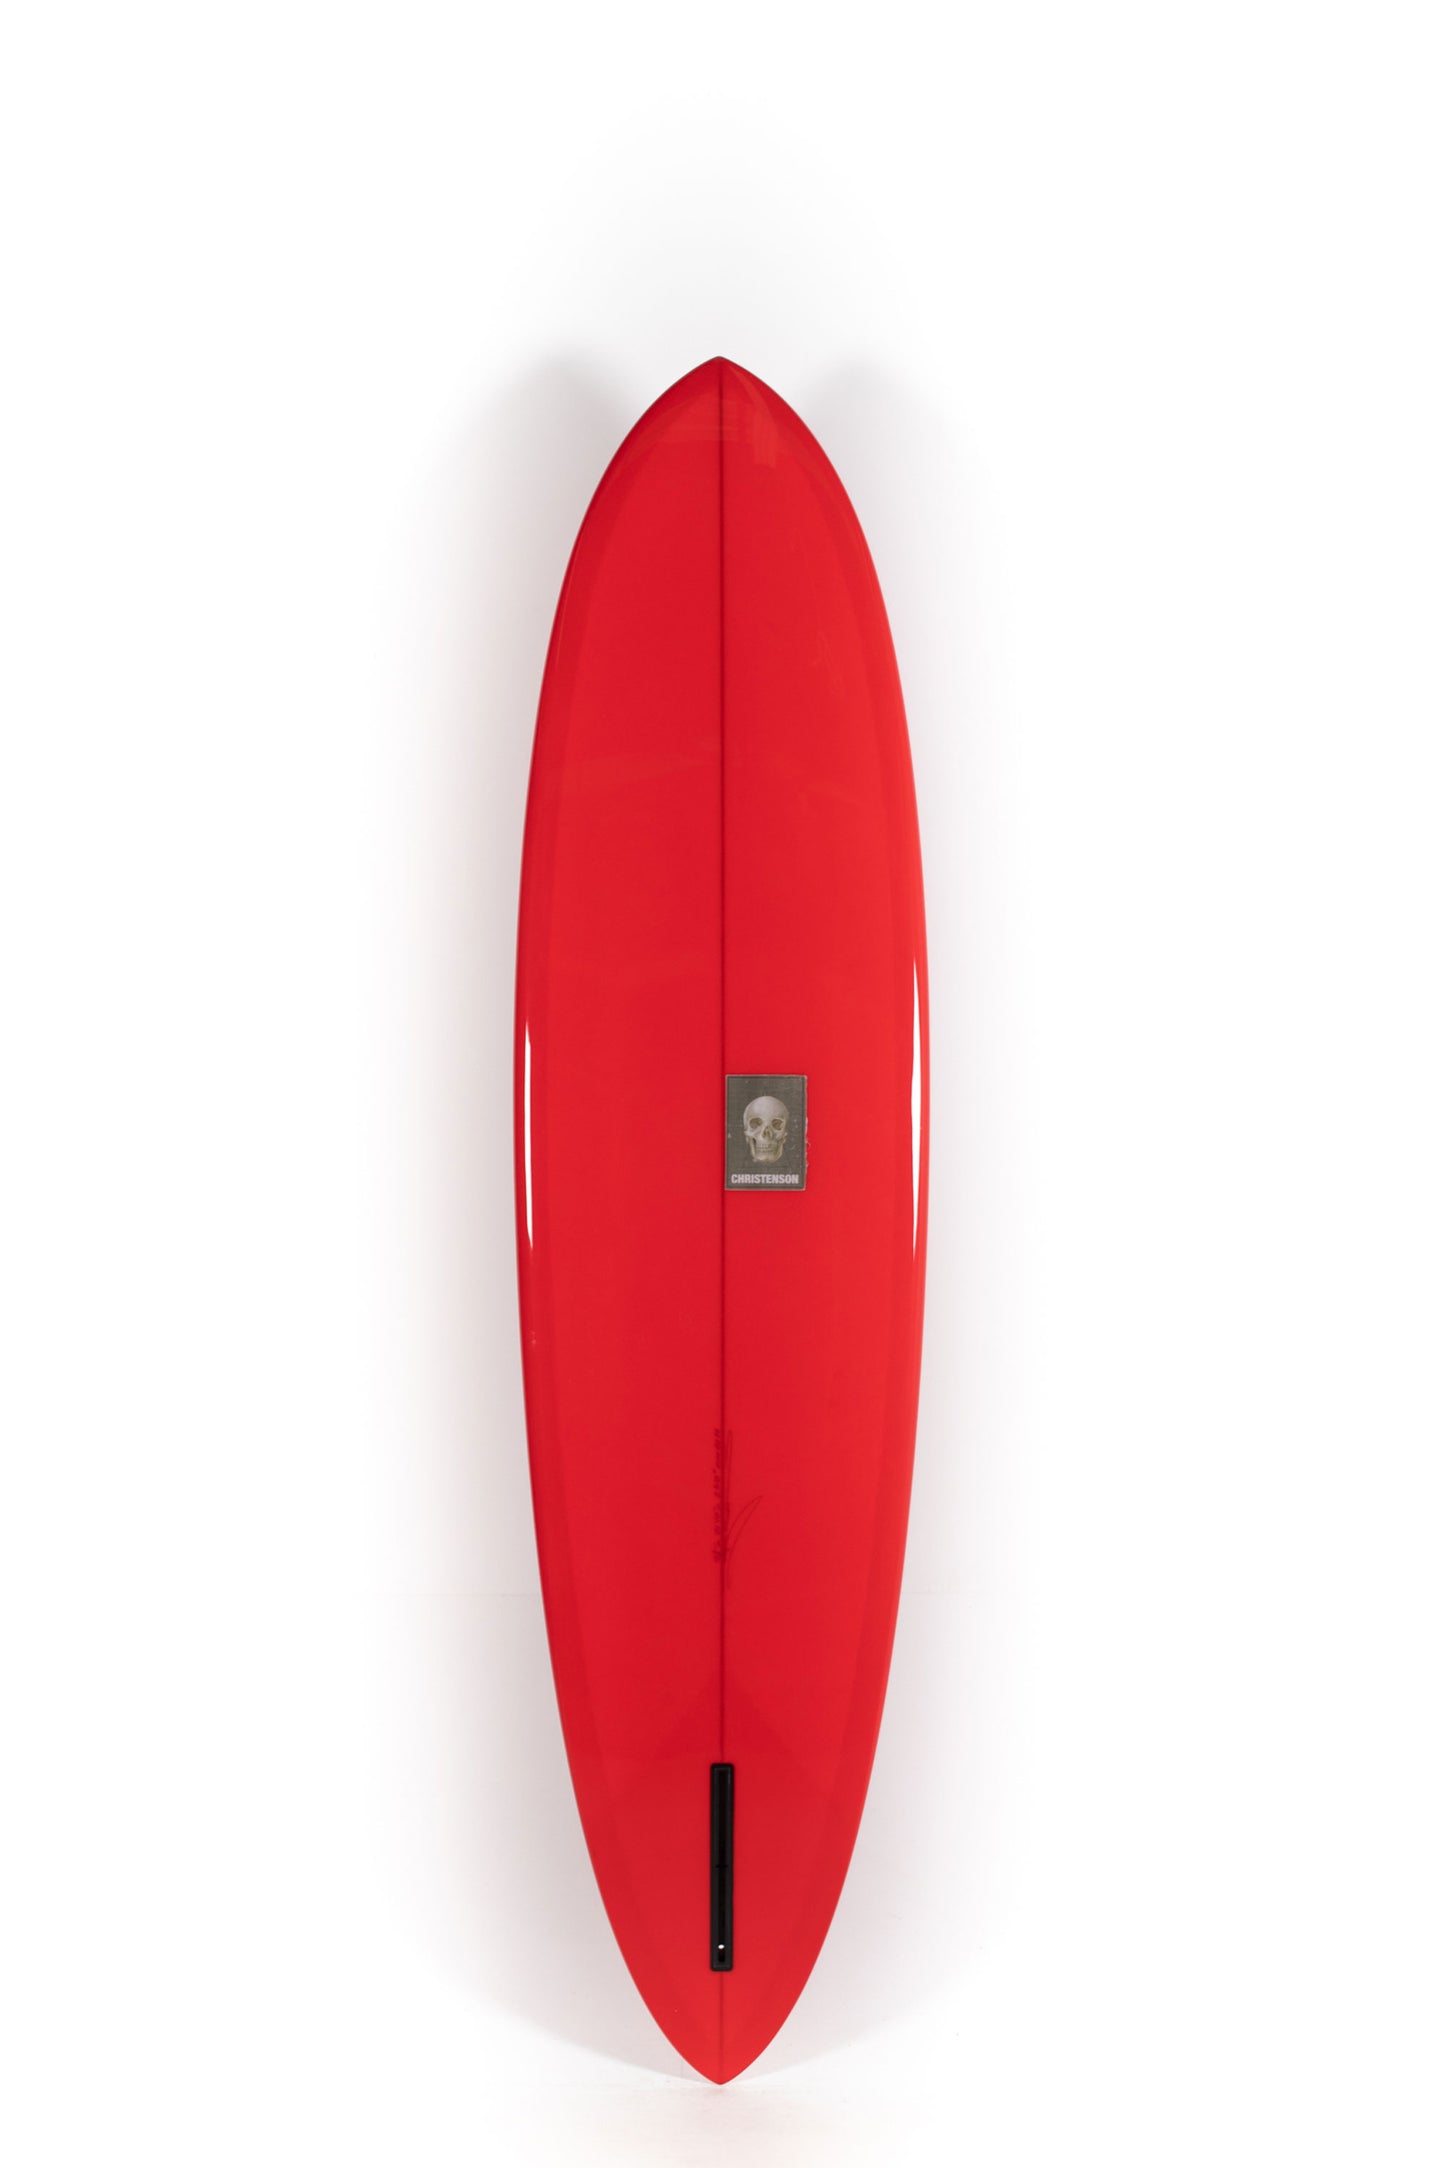 Pukas Surf Shop - Christenson Surfboards - C-BUCKET - 7'6" x 21 1/4 x 2 3/4 - CX04677